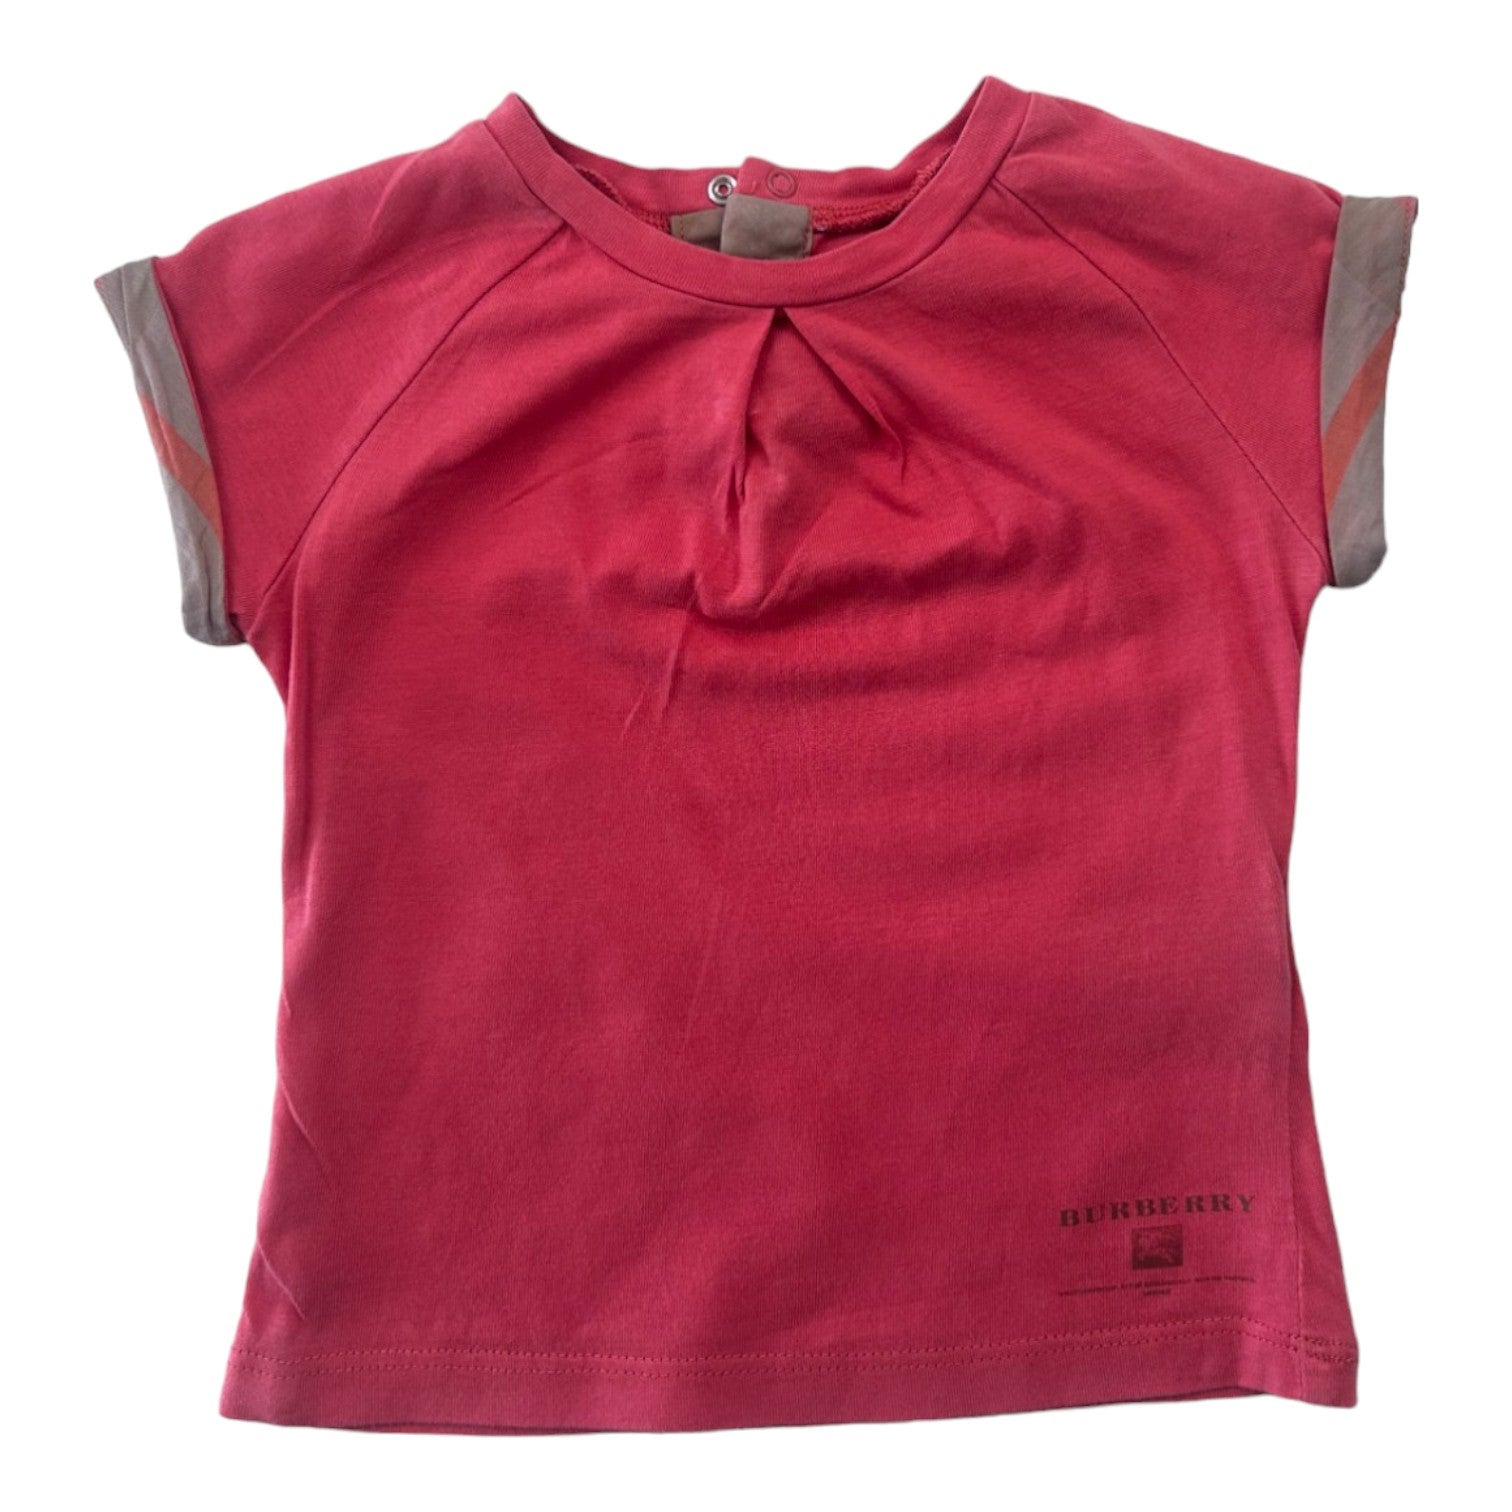 BURBERRY - T-shirt rose - 6 mois